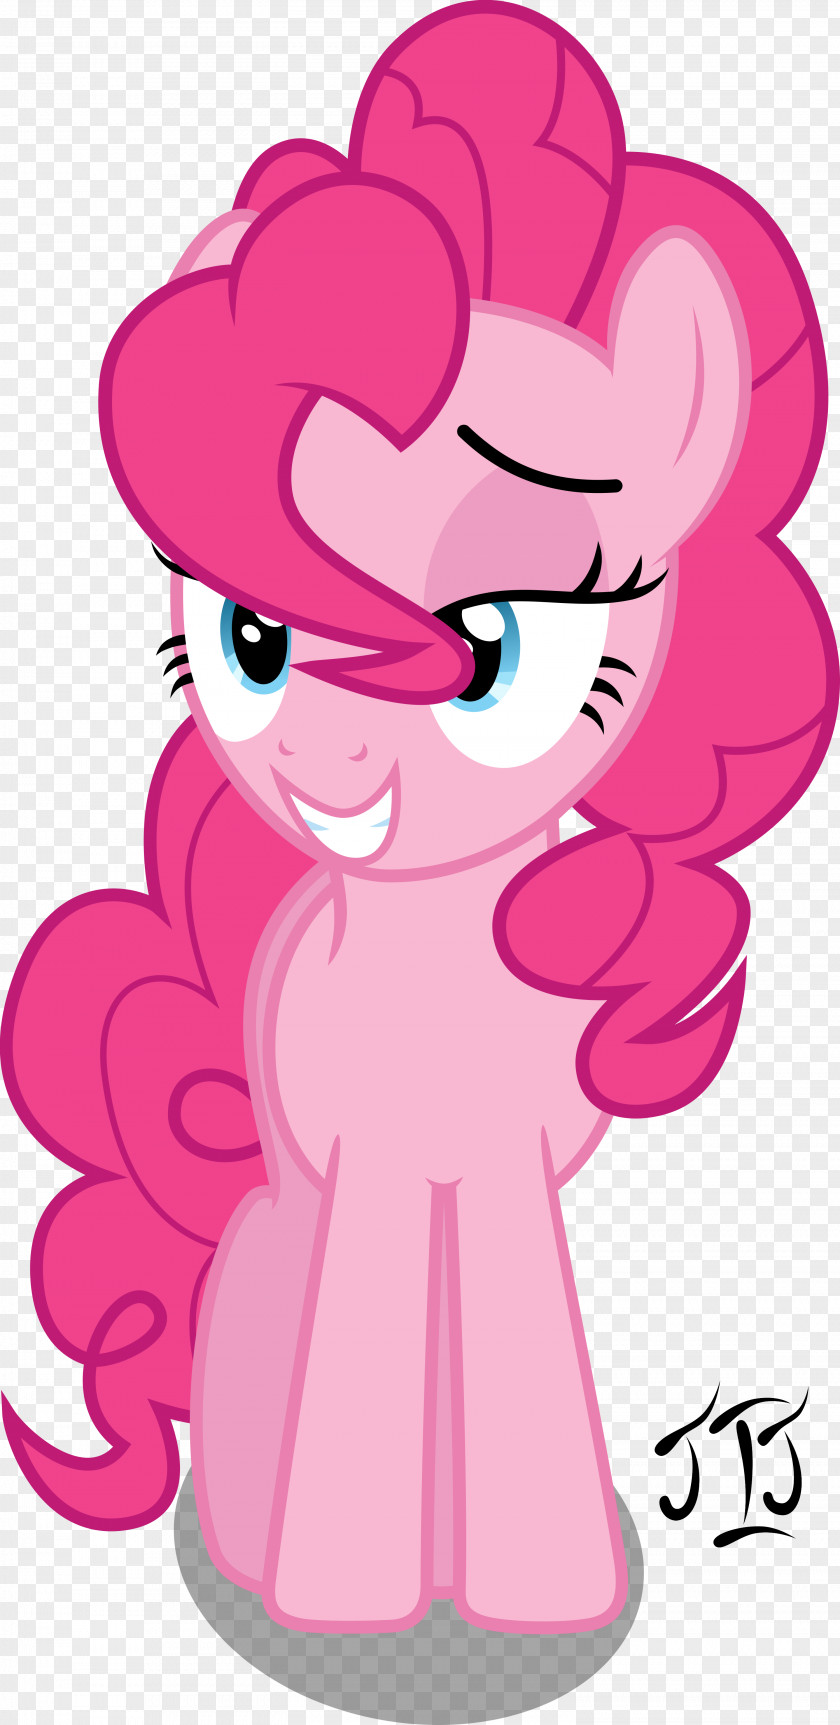 My Little Pony Pinkie Pie Pictures Rainbow Dash Applejack Fluttershy PNG